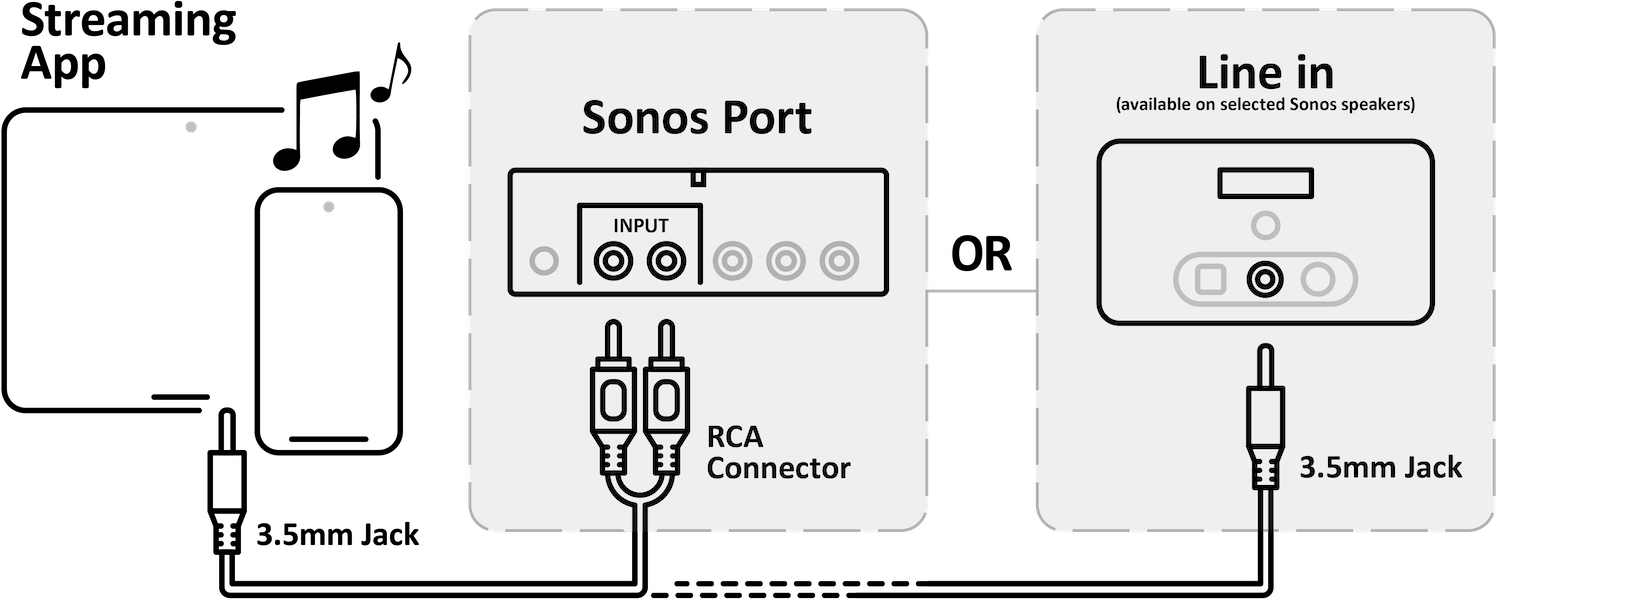 Mir Streaming App Sonos Port Line In